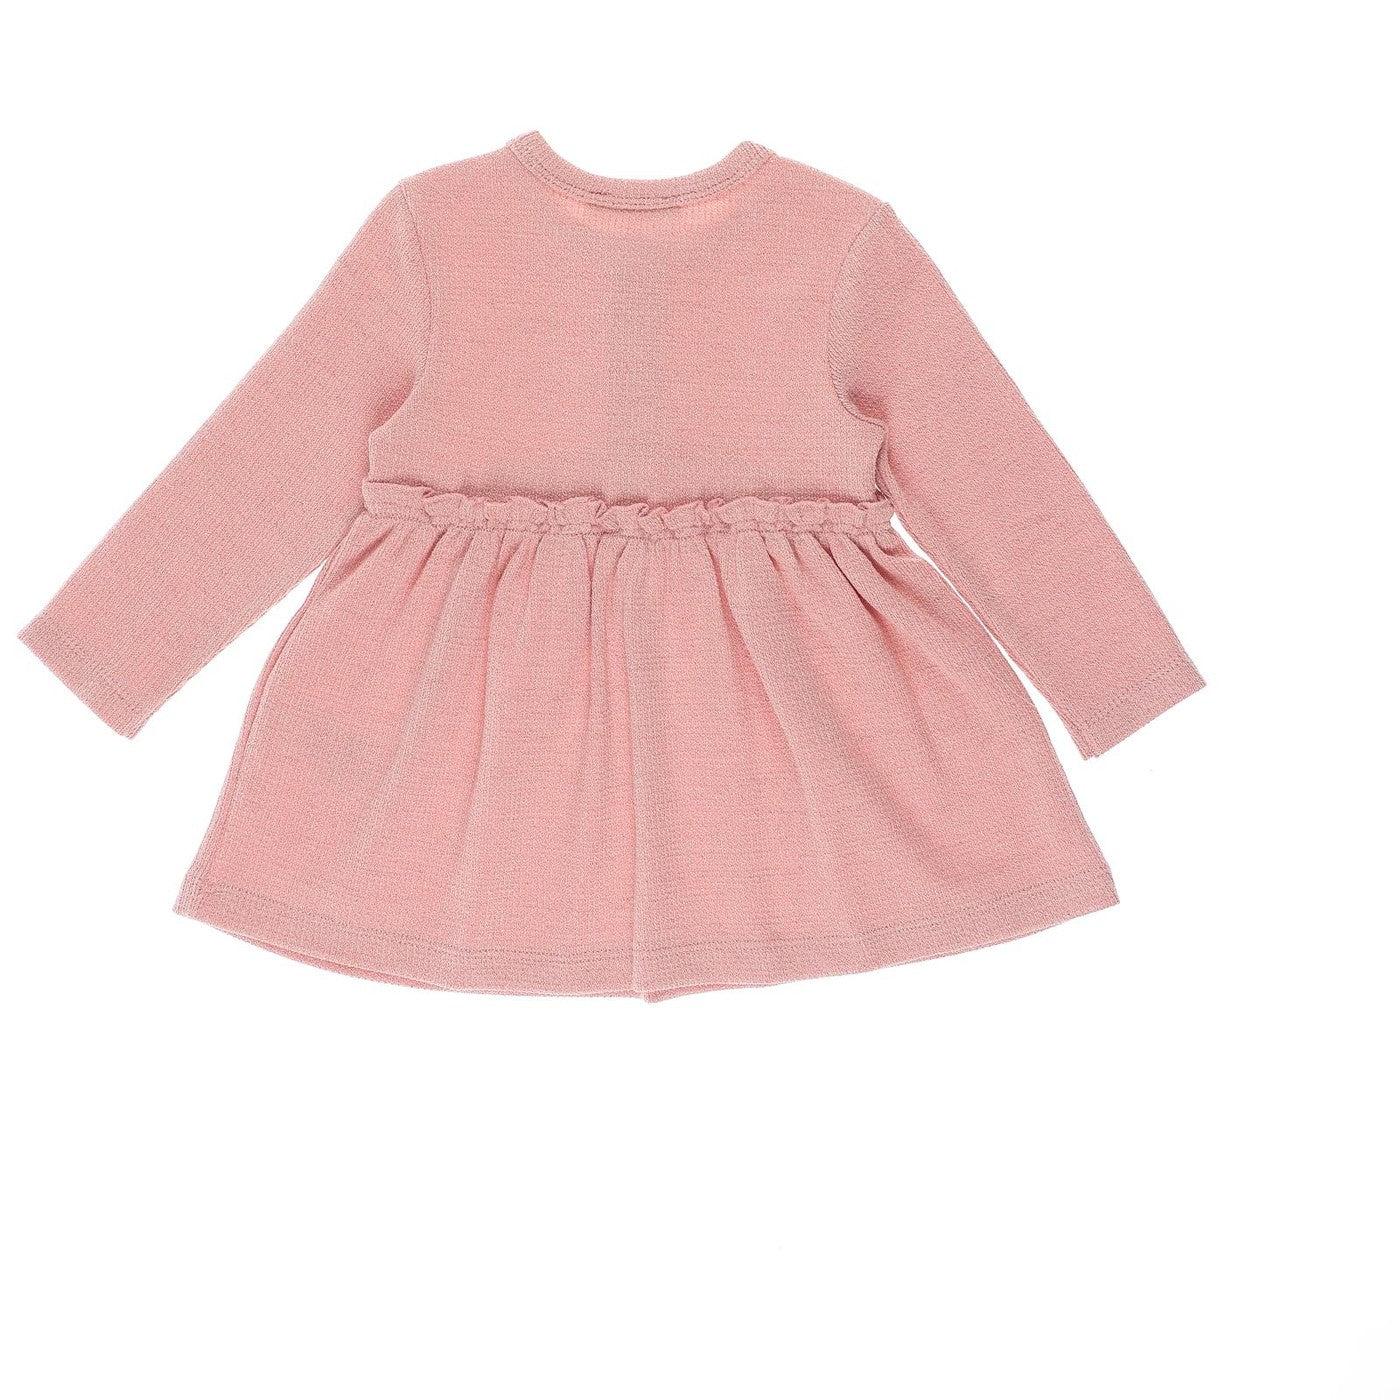 Selected image for PANÇO Pletena haljina za devojčice roze